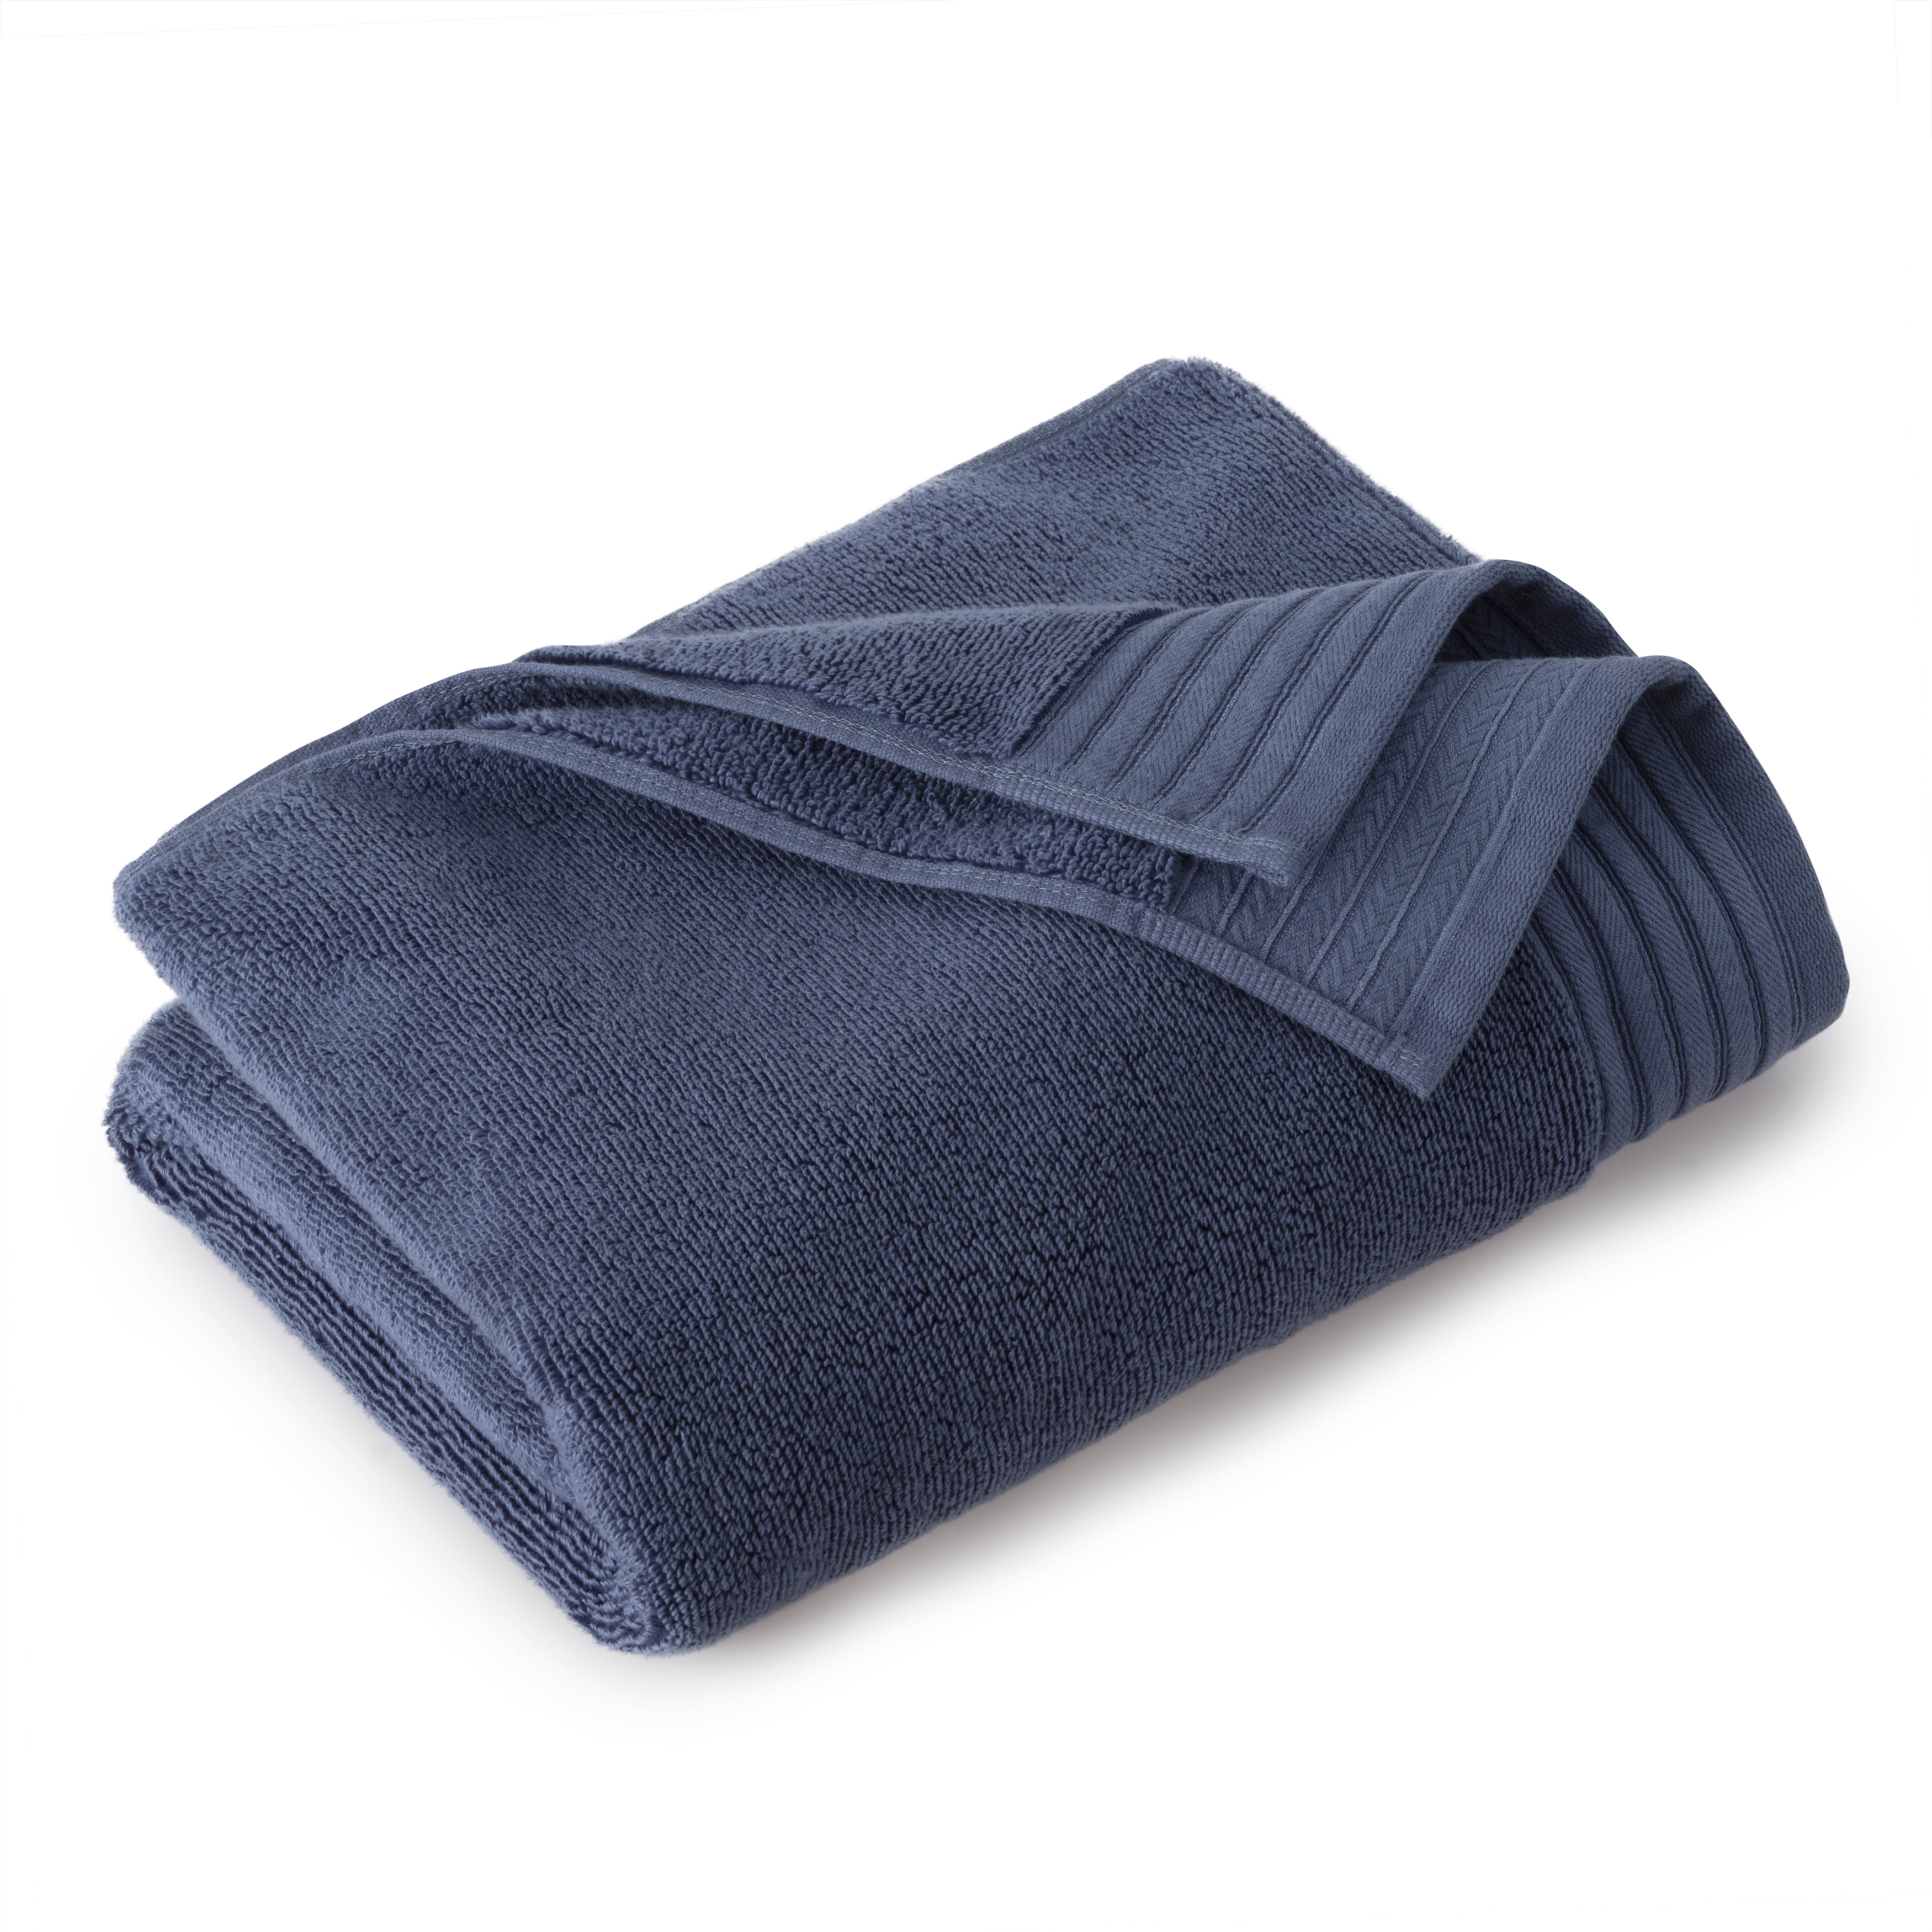 Purely Indulgent Egyptian Cotton Bath Towel Set Dark Blue